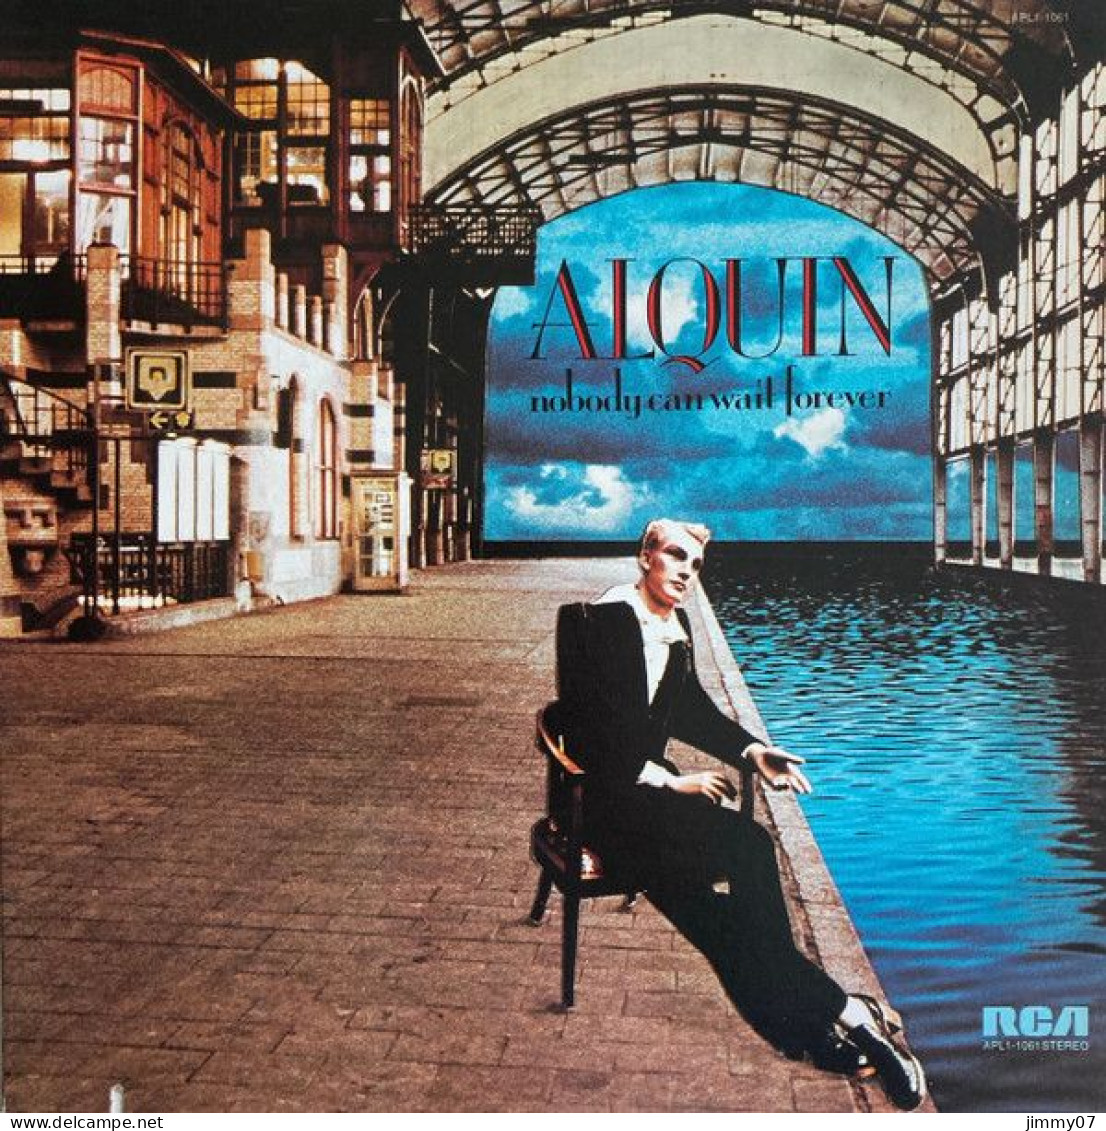 Alquin - Nobody Can Wait Forever (LP, Album) - Rock